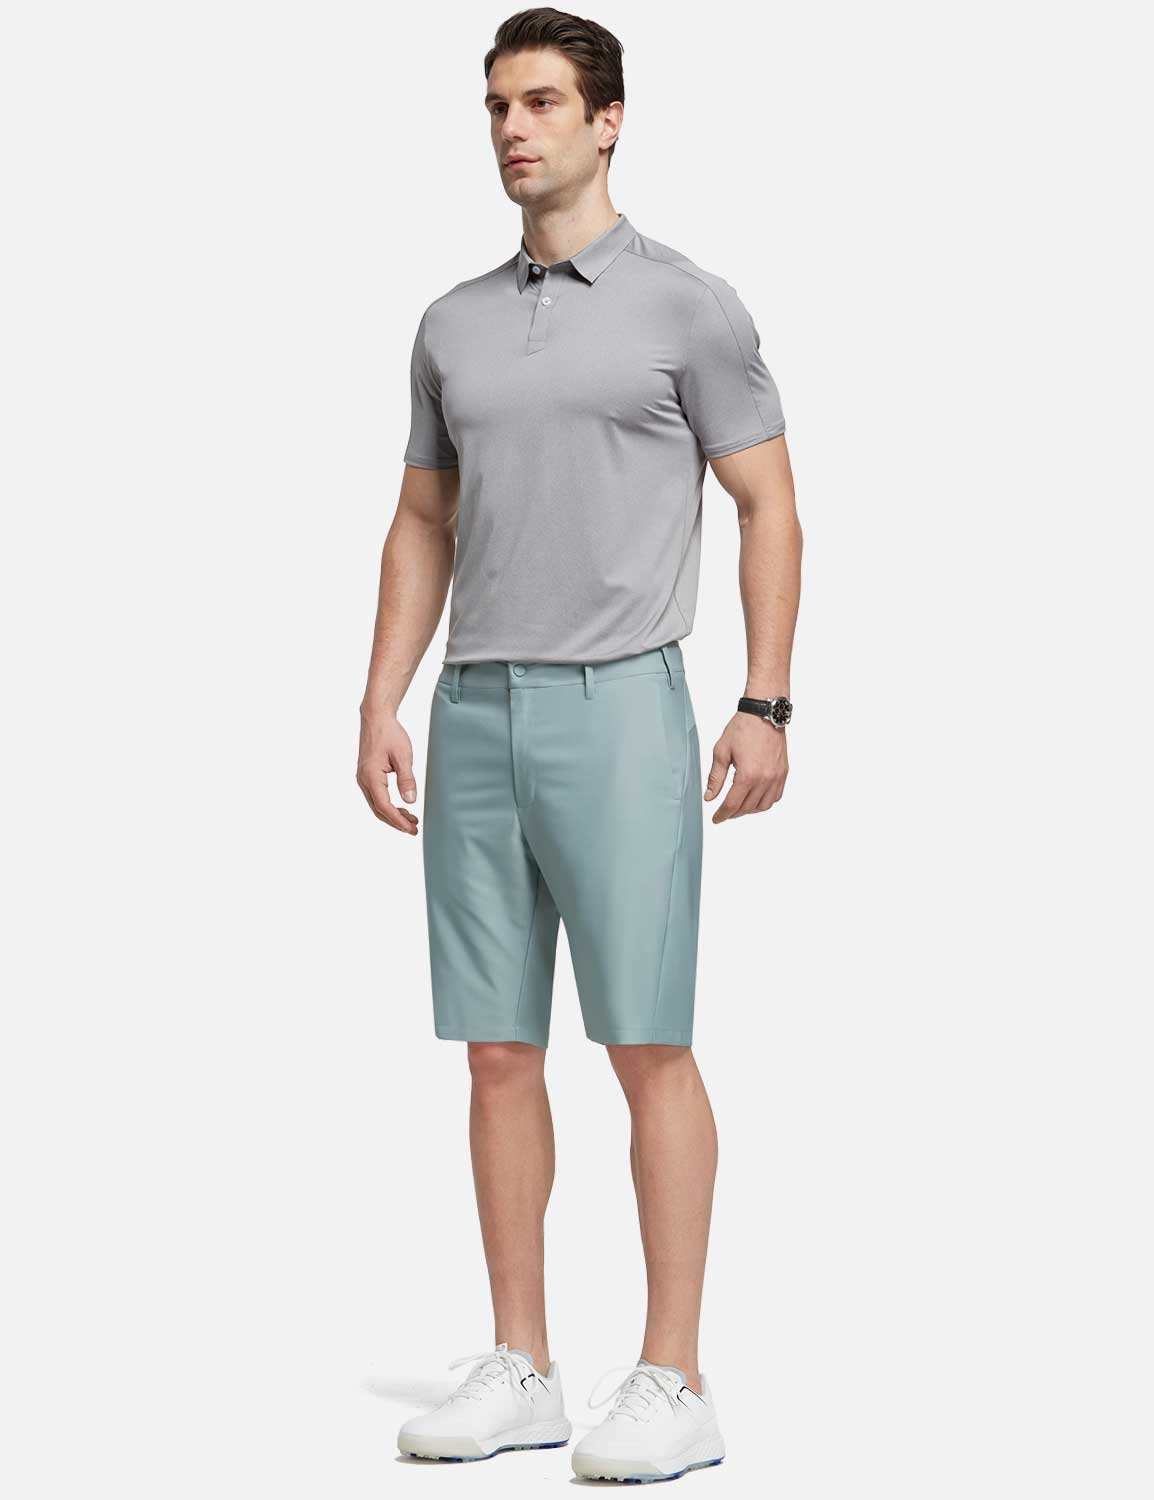 Baleaf Men's 10' UPF 50+ Lightweight Golf Shorts w Zipper Pockets cga005 Blue Full